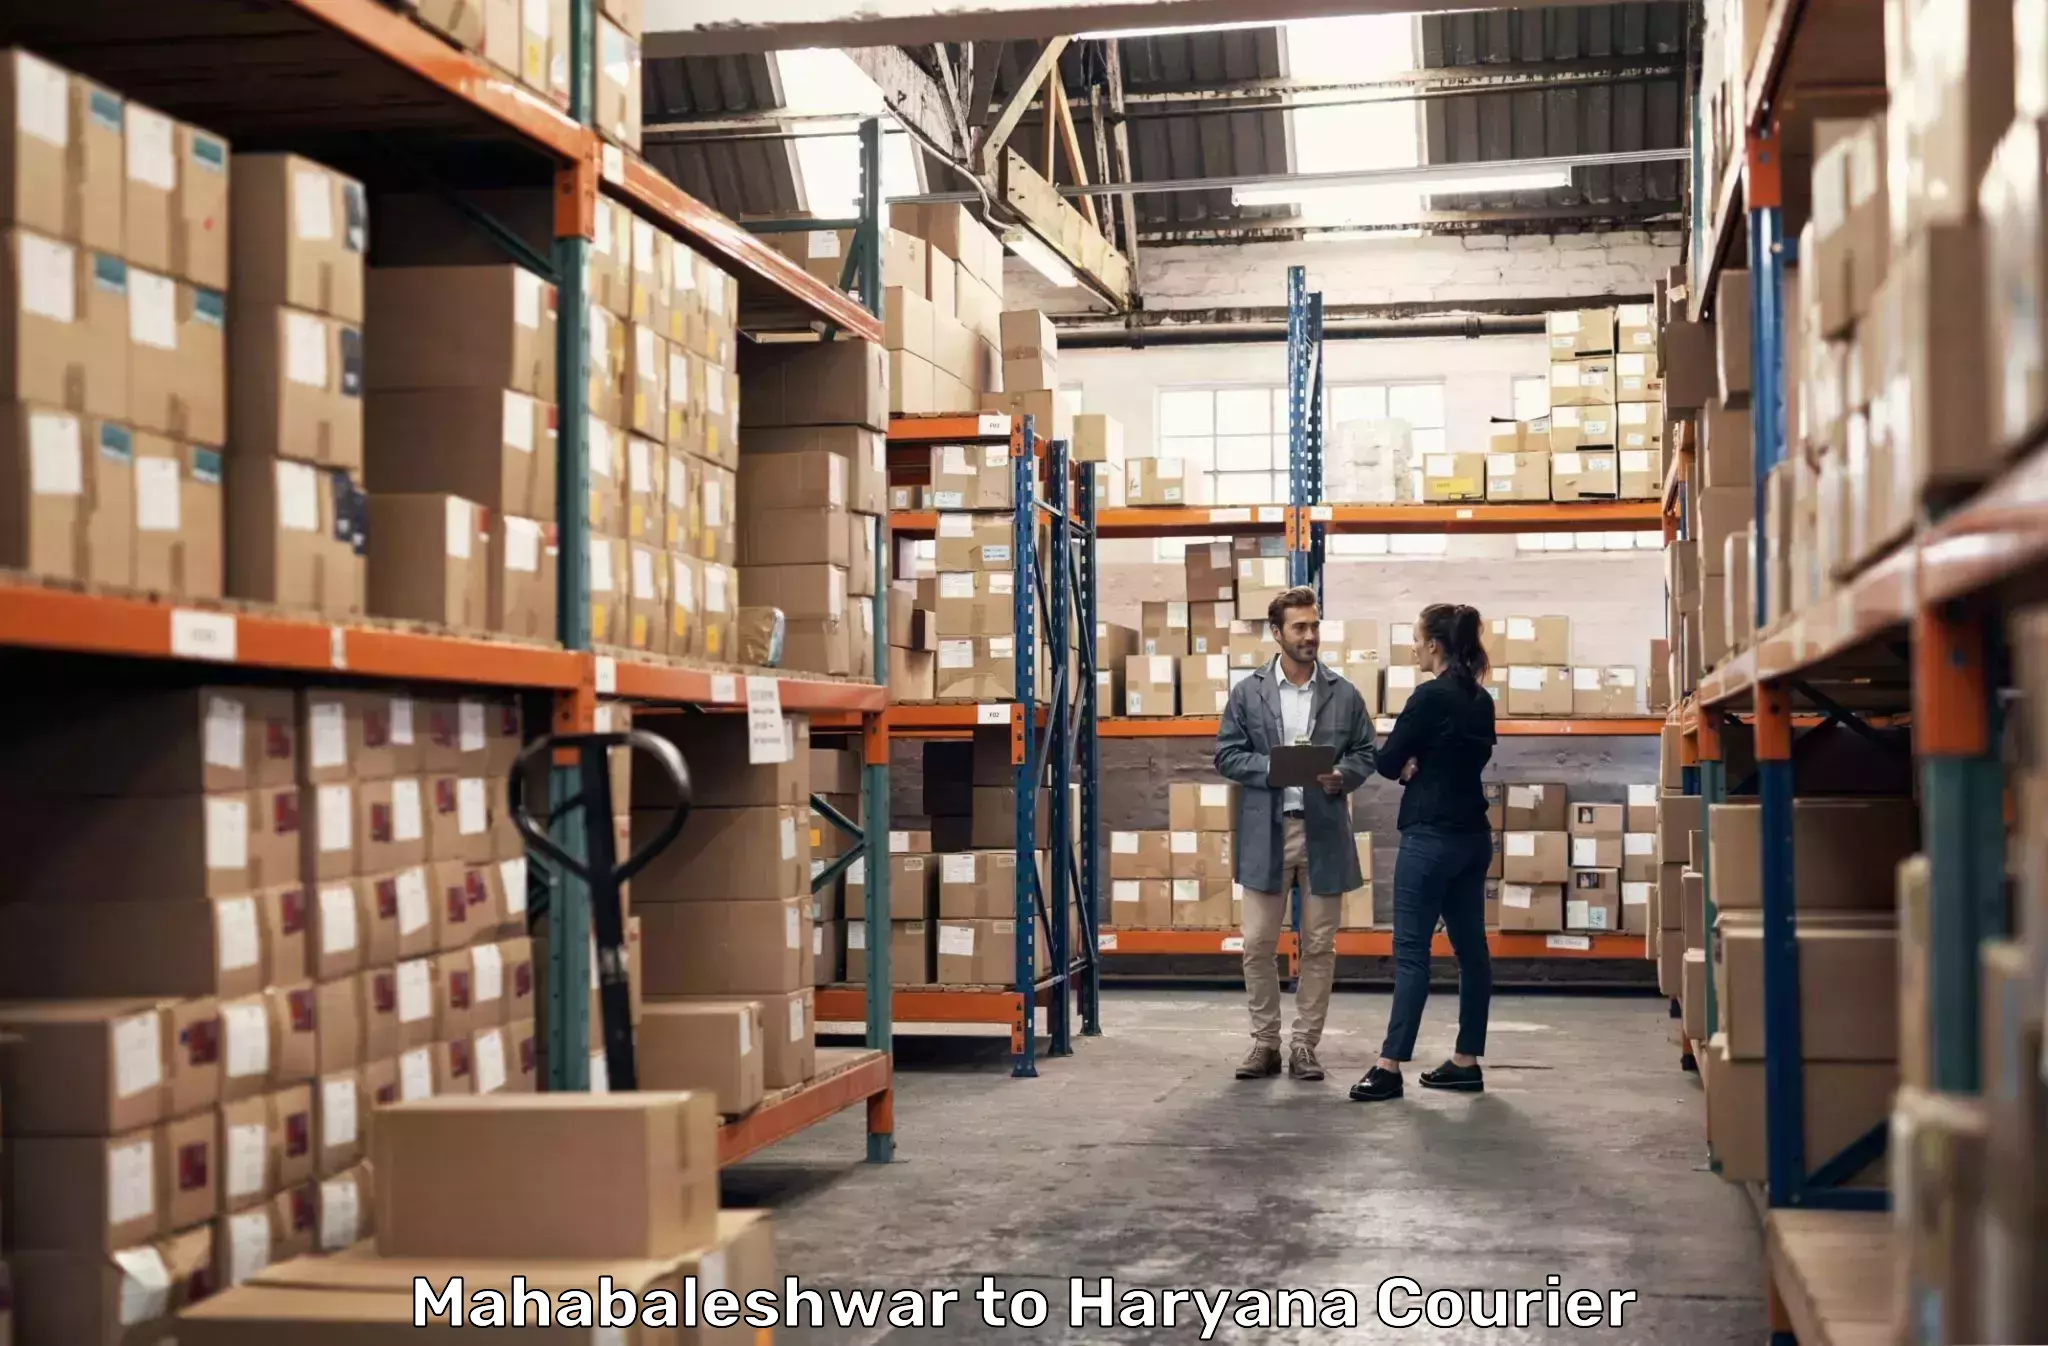 High-priority parcel service Mahabaleshwar to Panipat